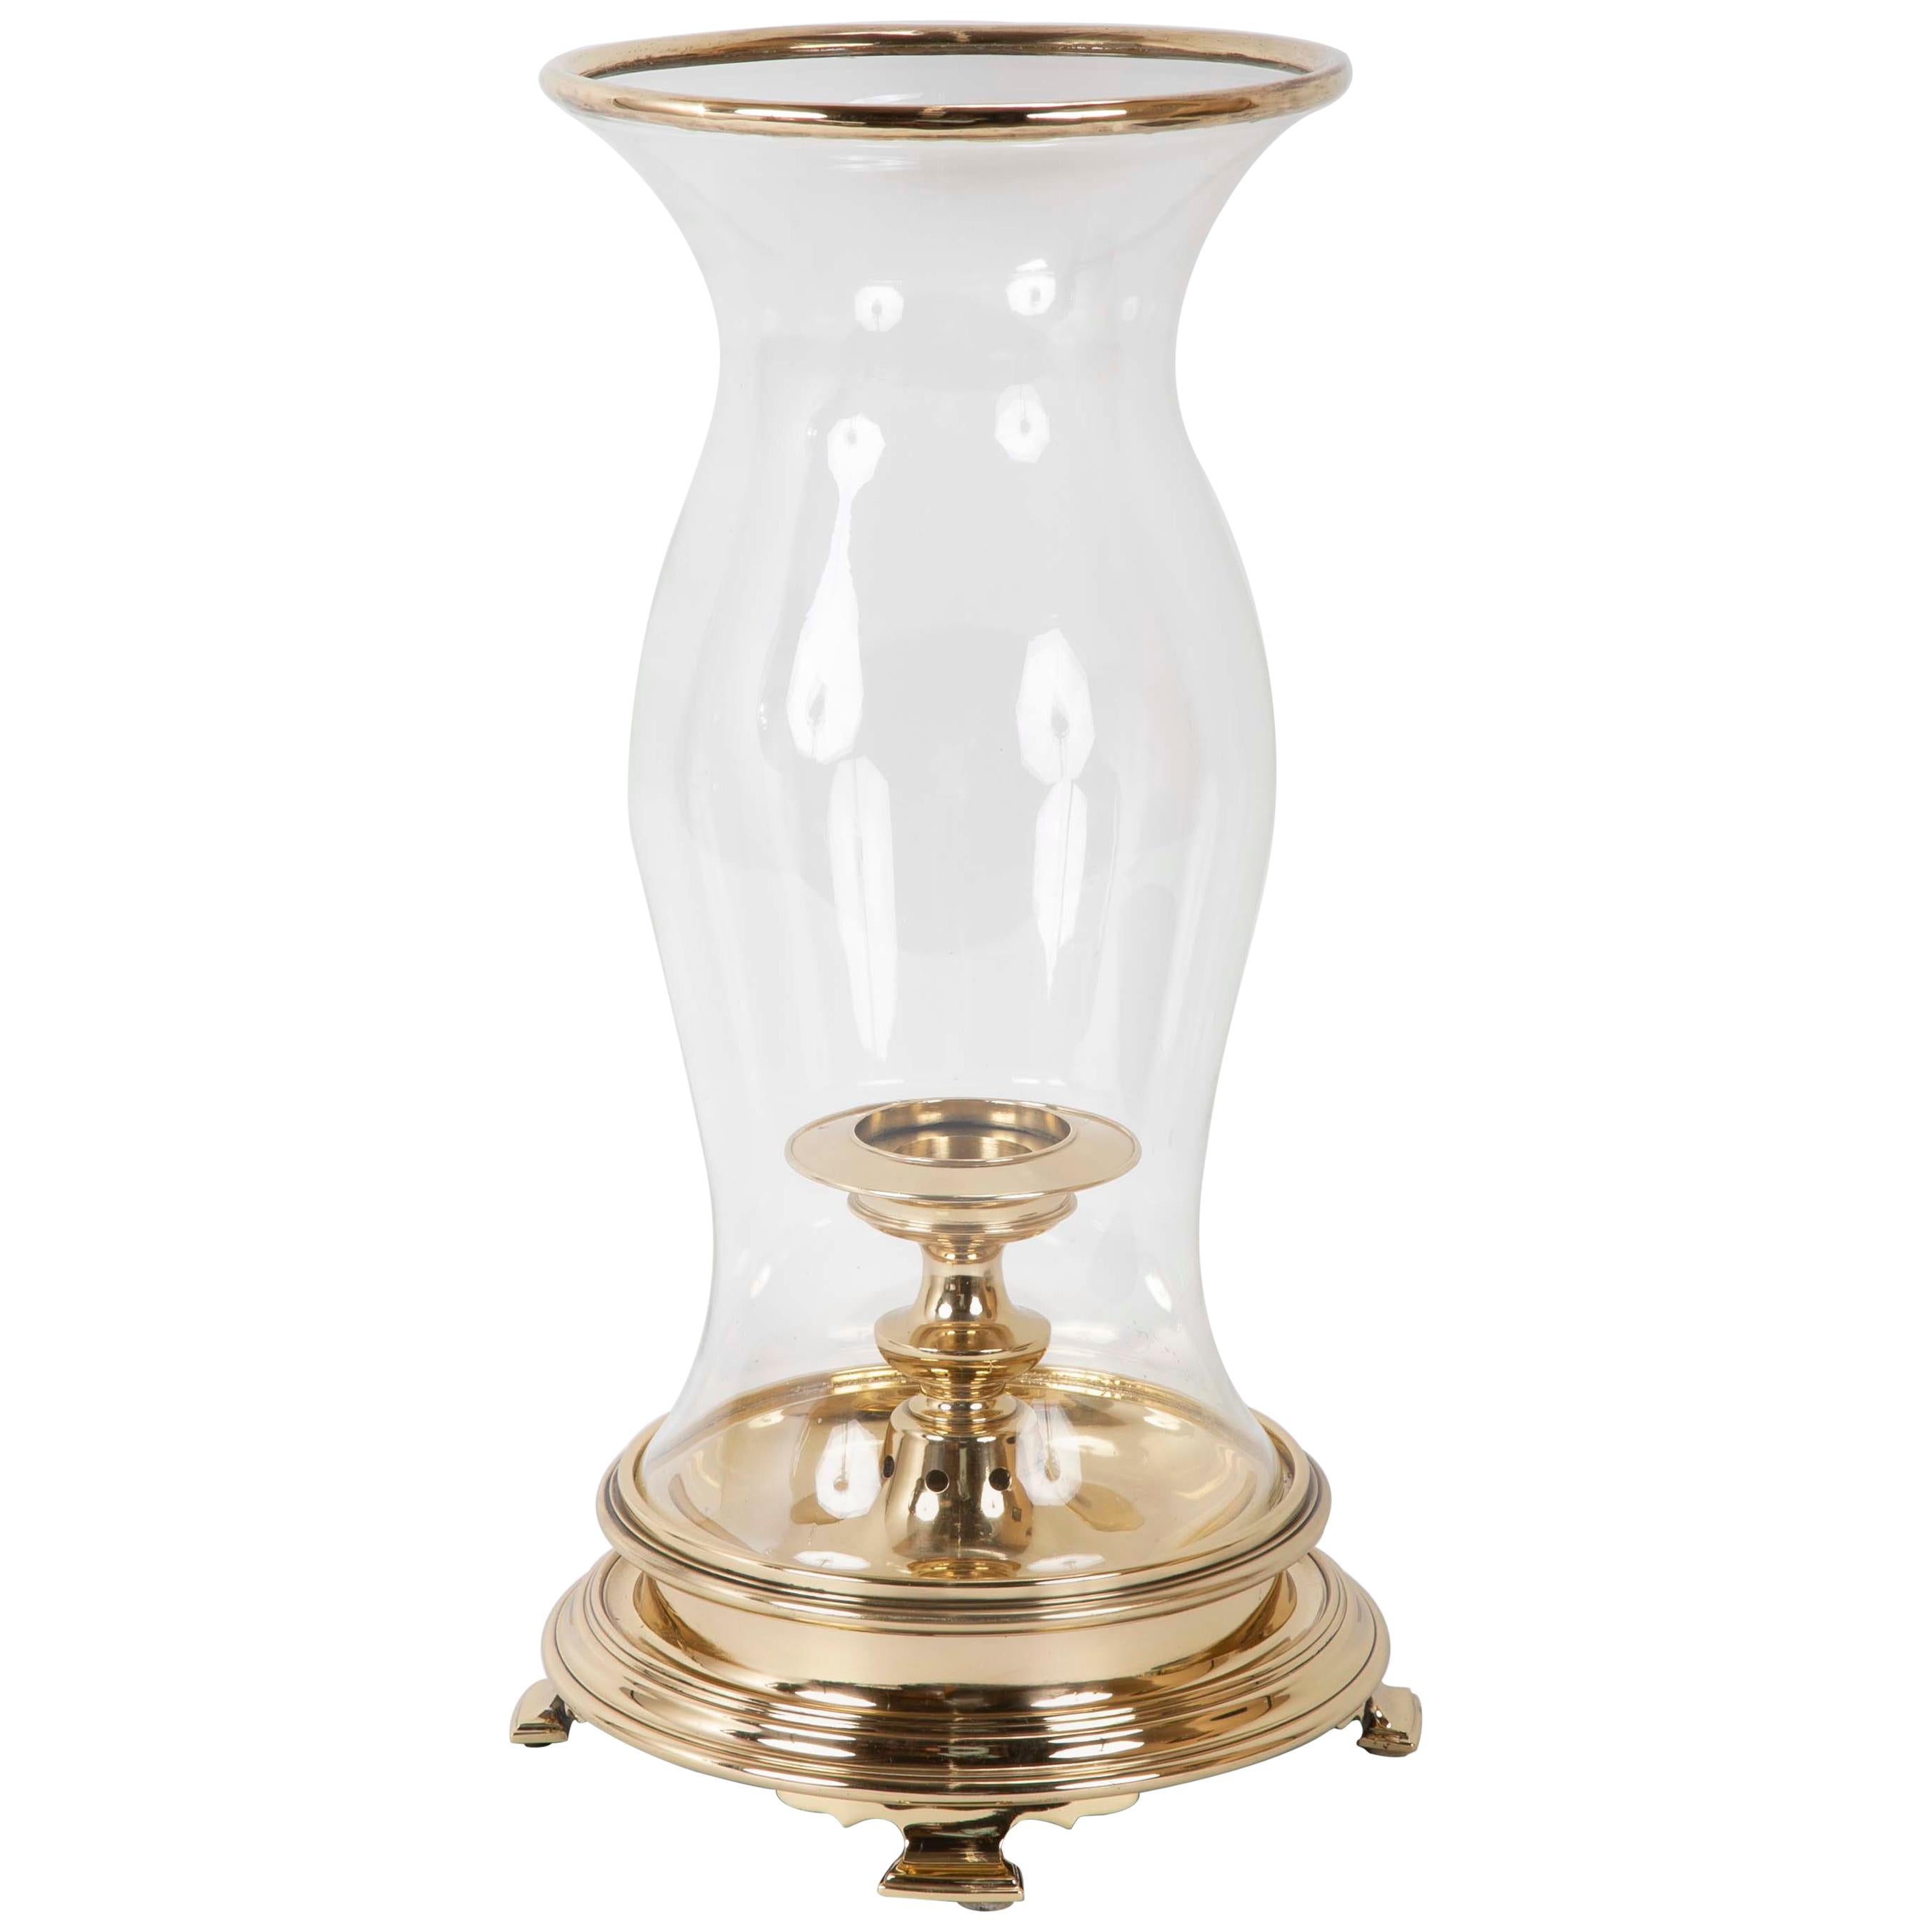 Regency Style Brass Hurricane Lamp, Large Scale